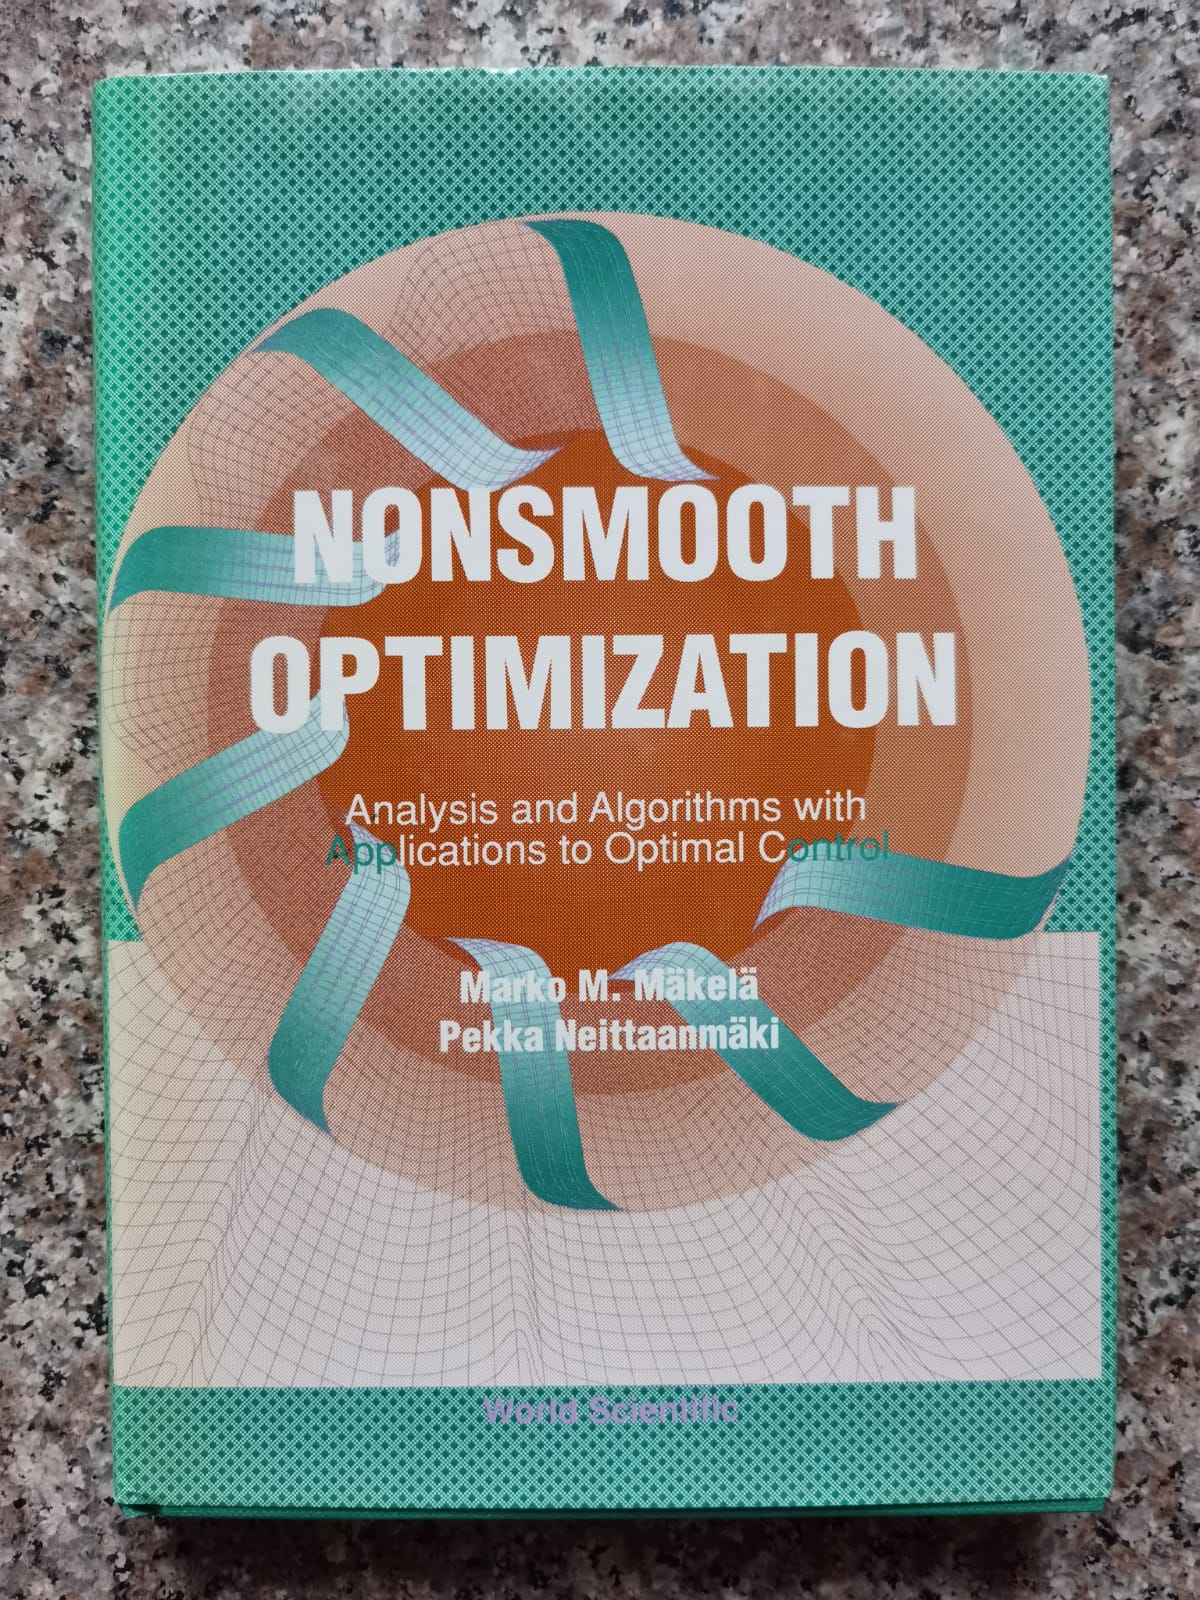 nonsmooth optimization analysis and algorithms with applications to optimal control                  marko m. makela, pekka neittaanmaki                                                                 